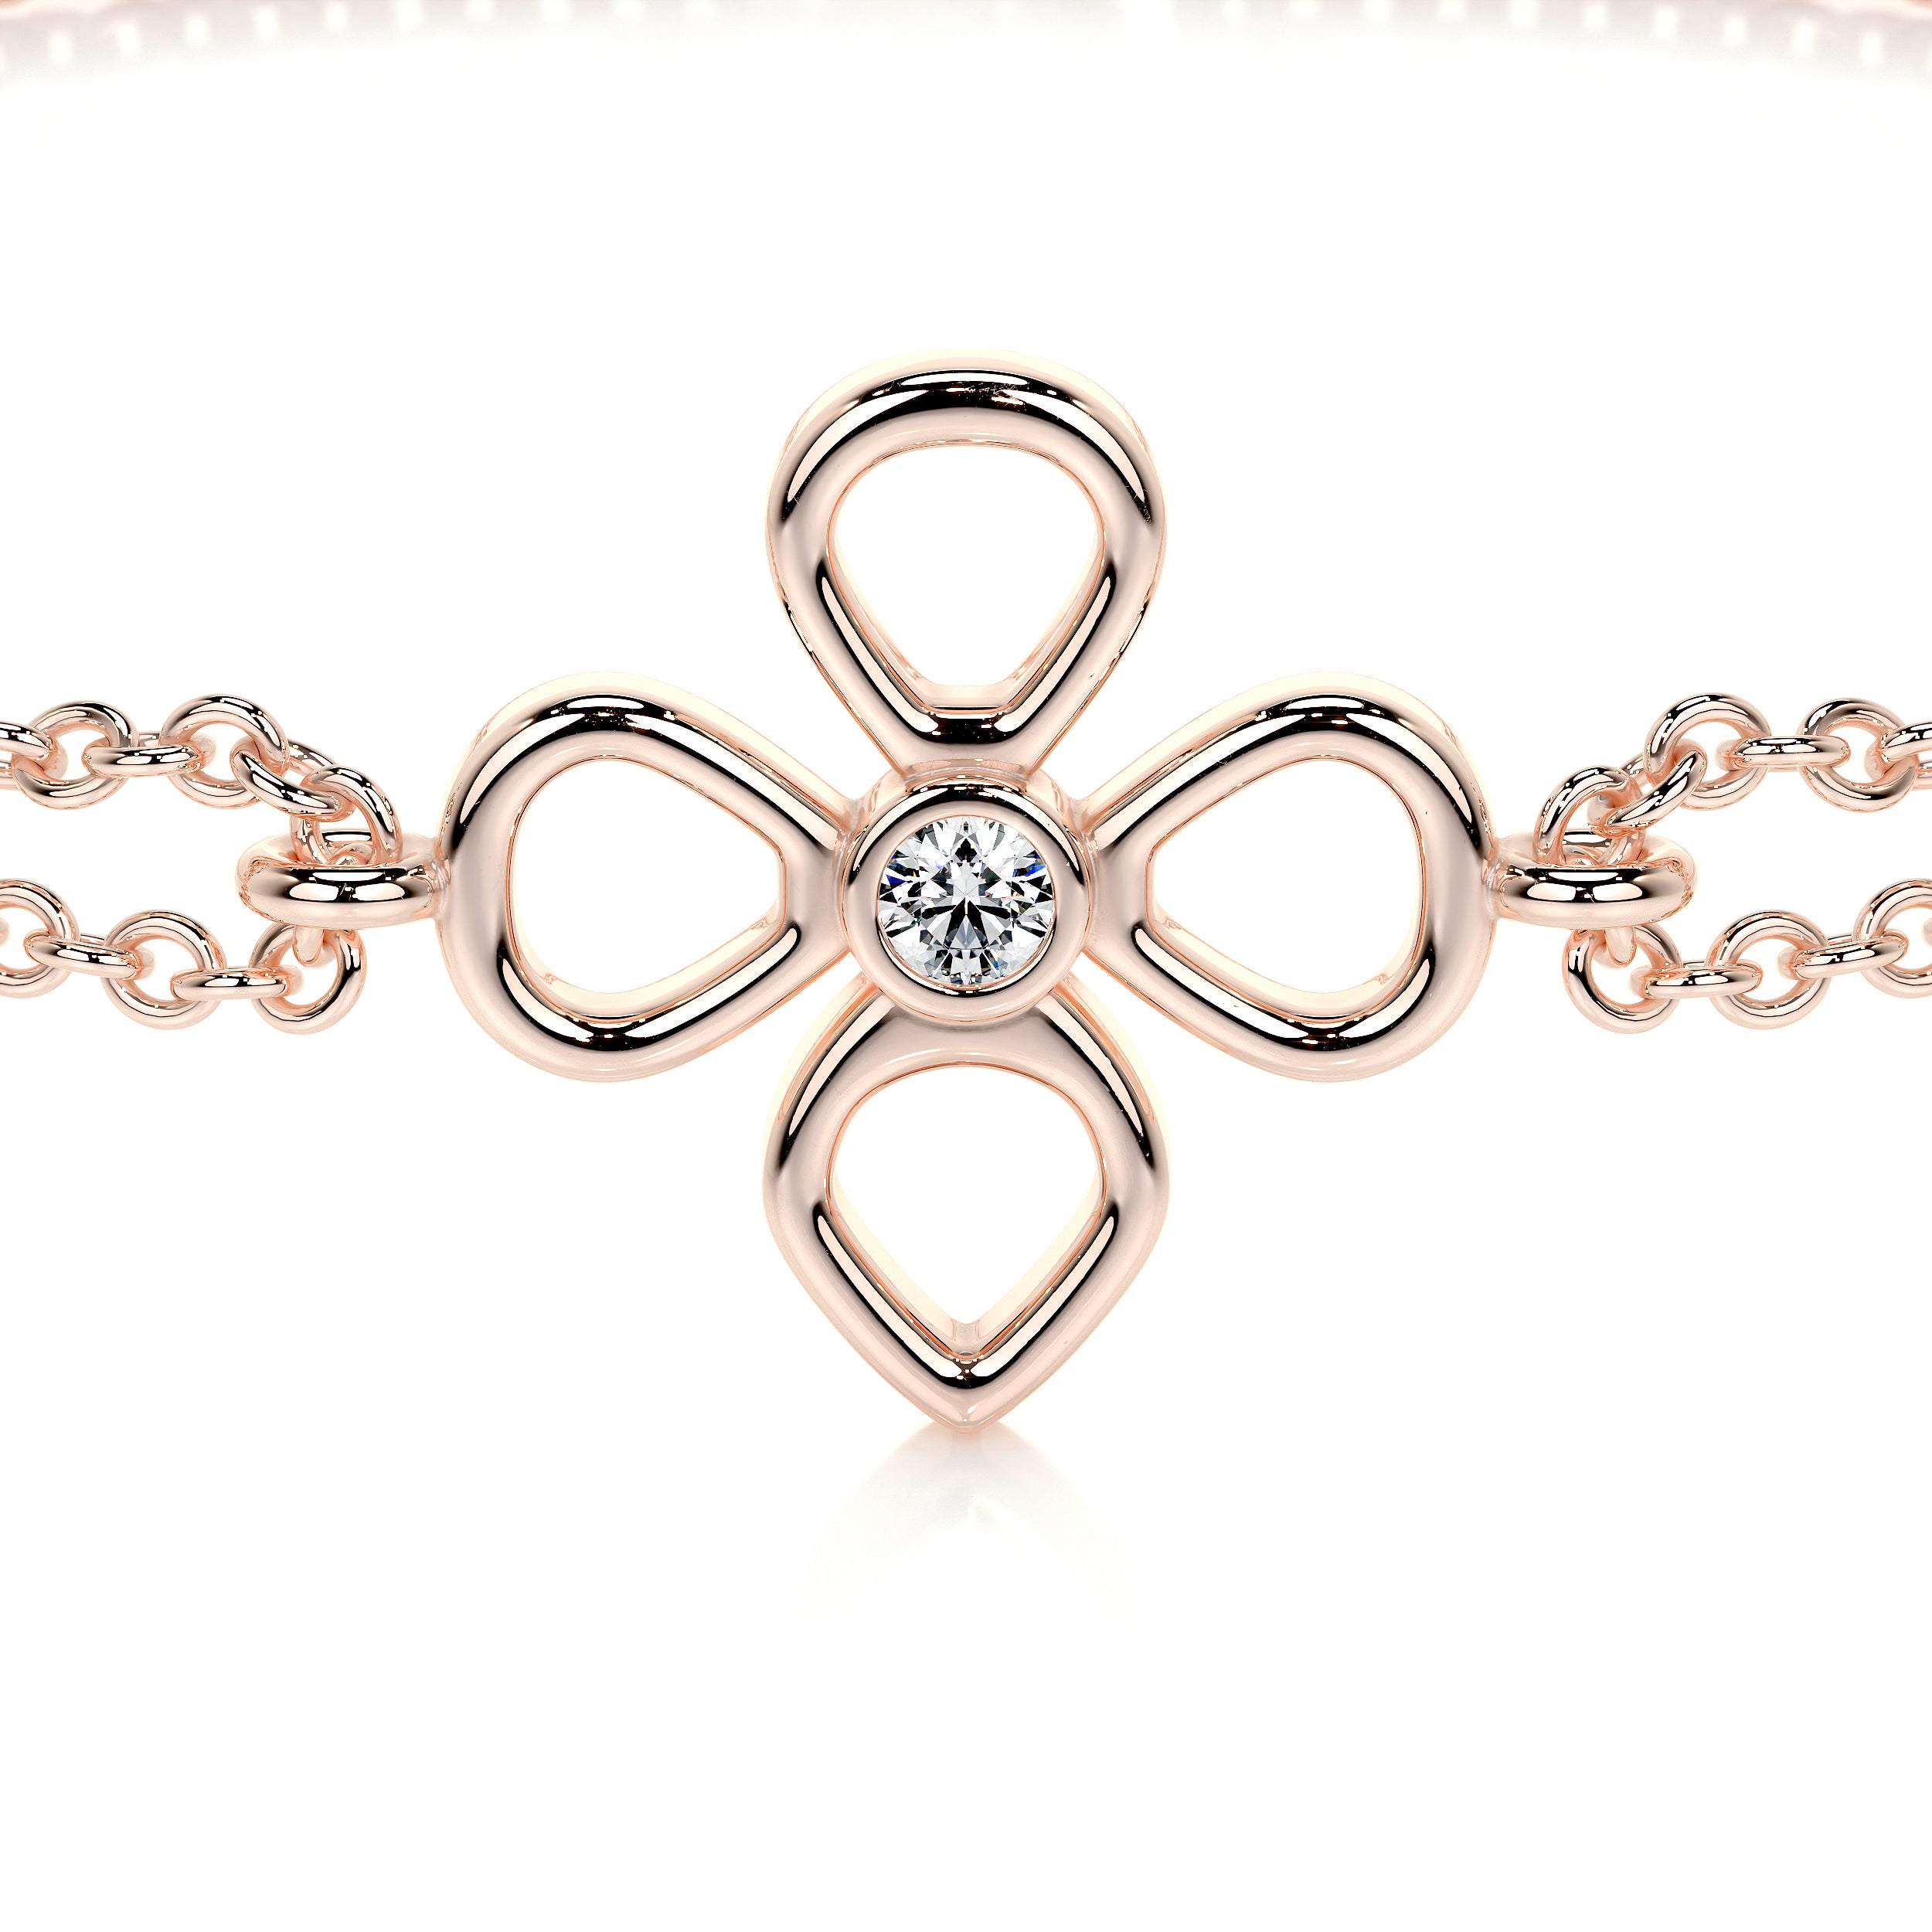 Dolores Lab Grown Diamonds Bracelet   (0.02 Carat) -14K Rose Gold